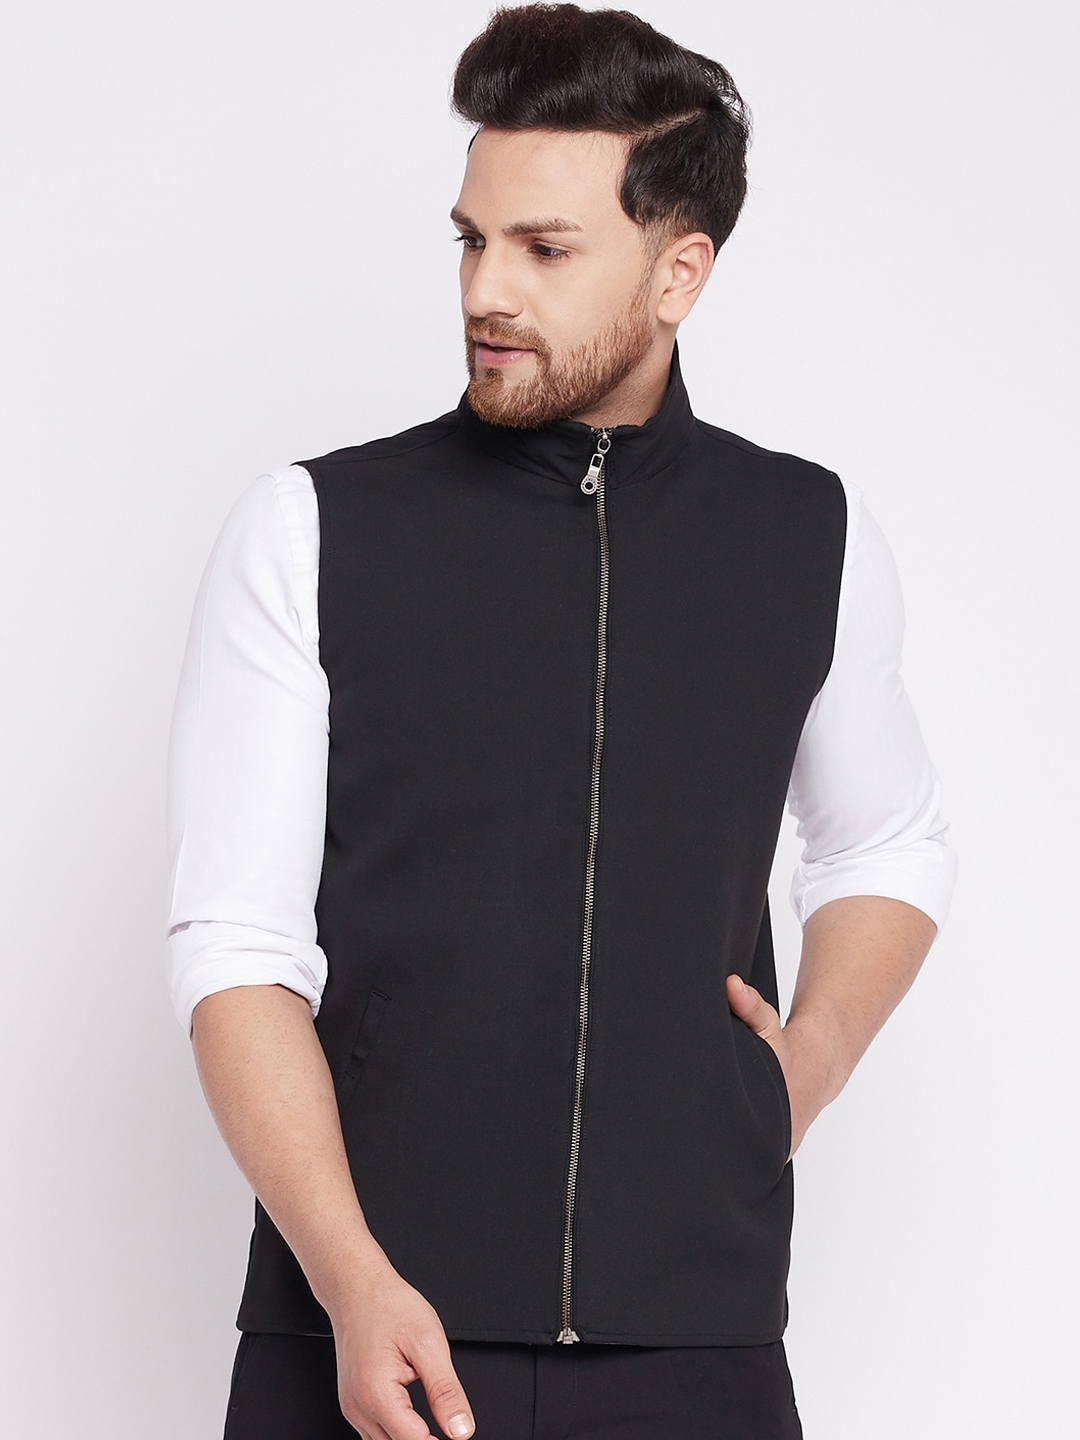 Buy Even Men Black Tailored Jacket - Jackets for Men 16382000 | Myntra